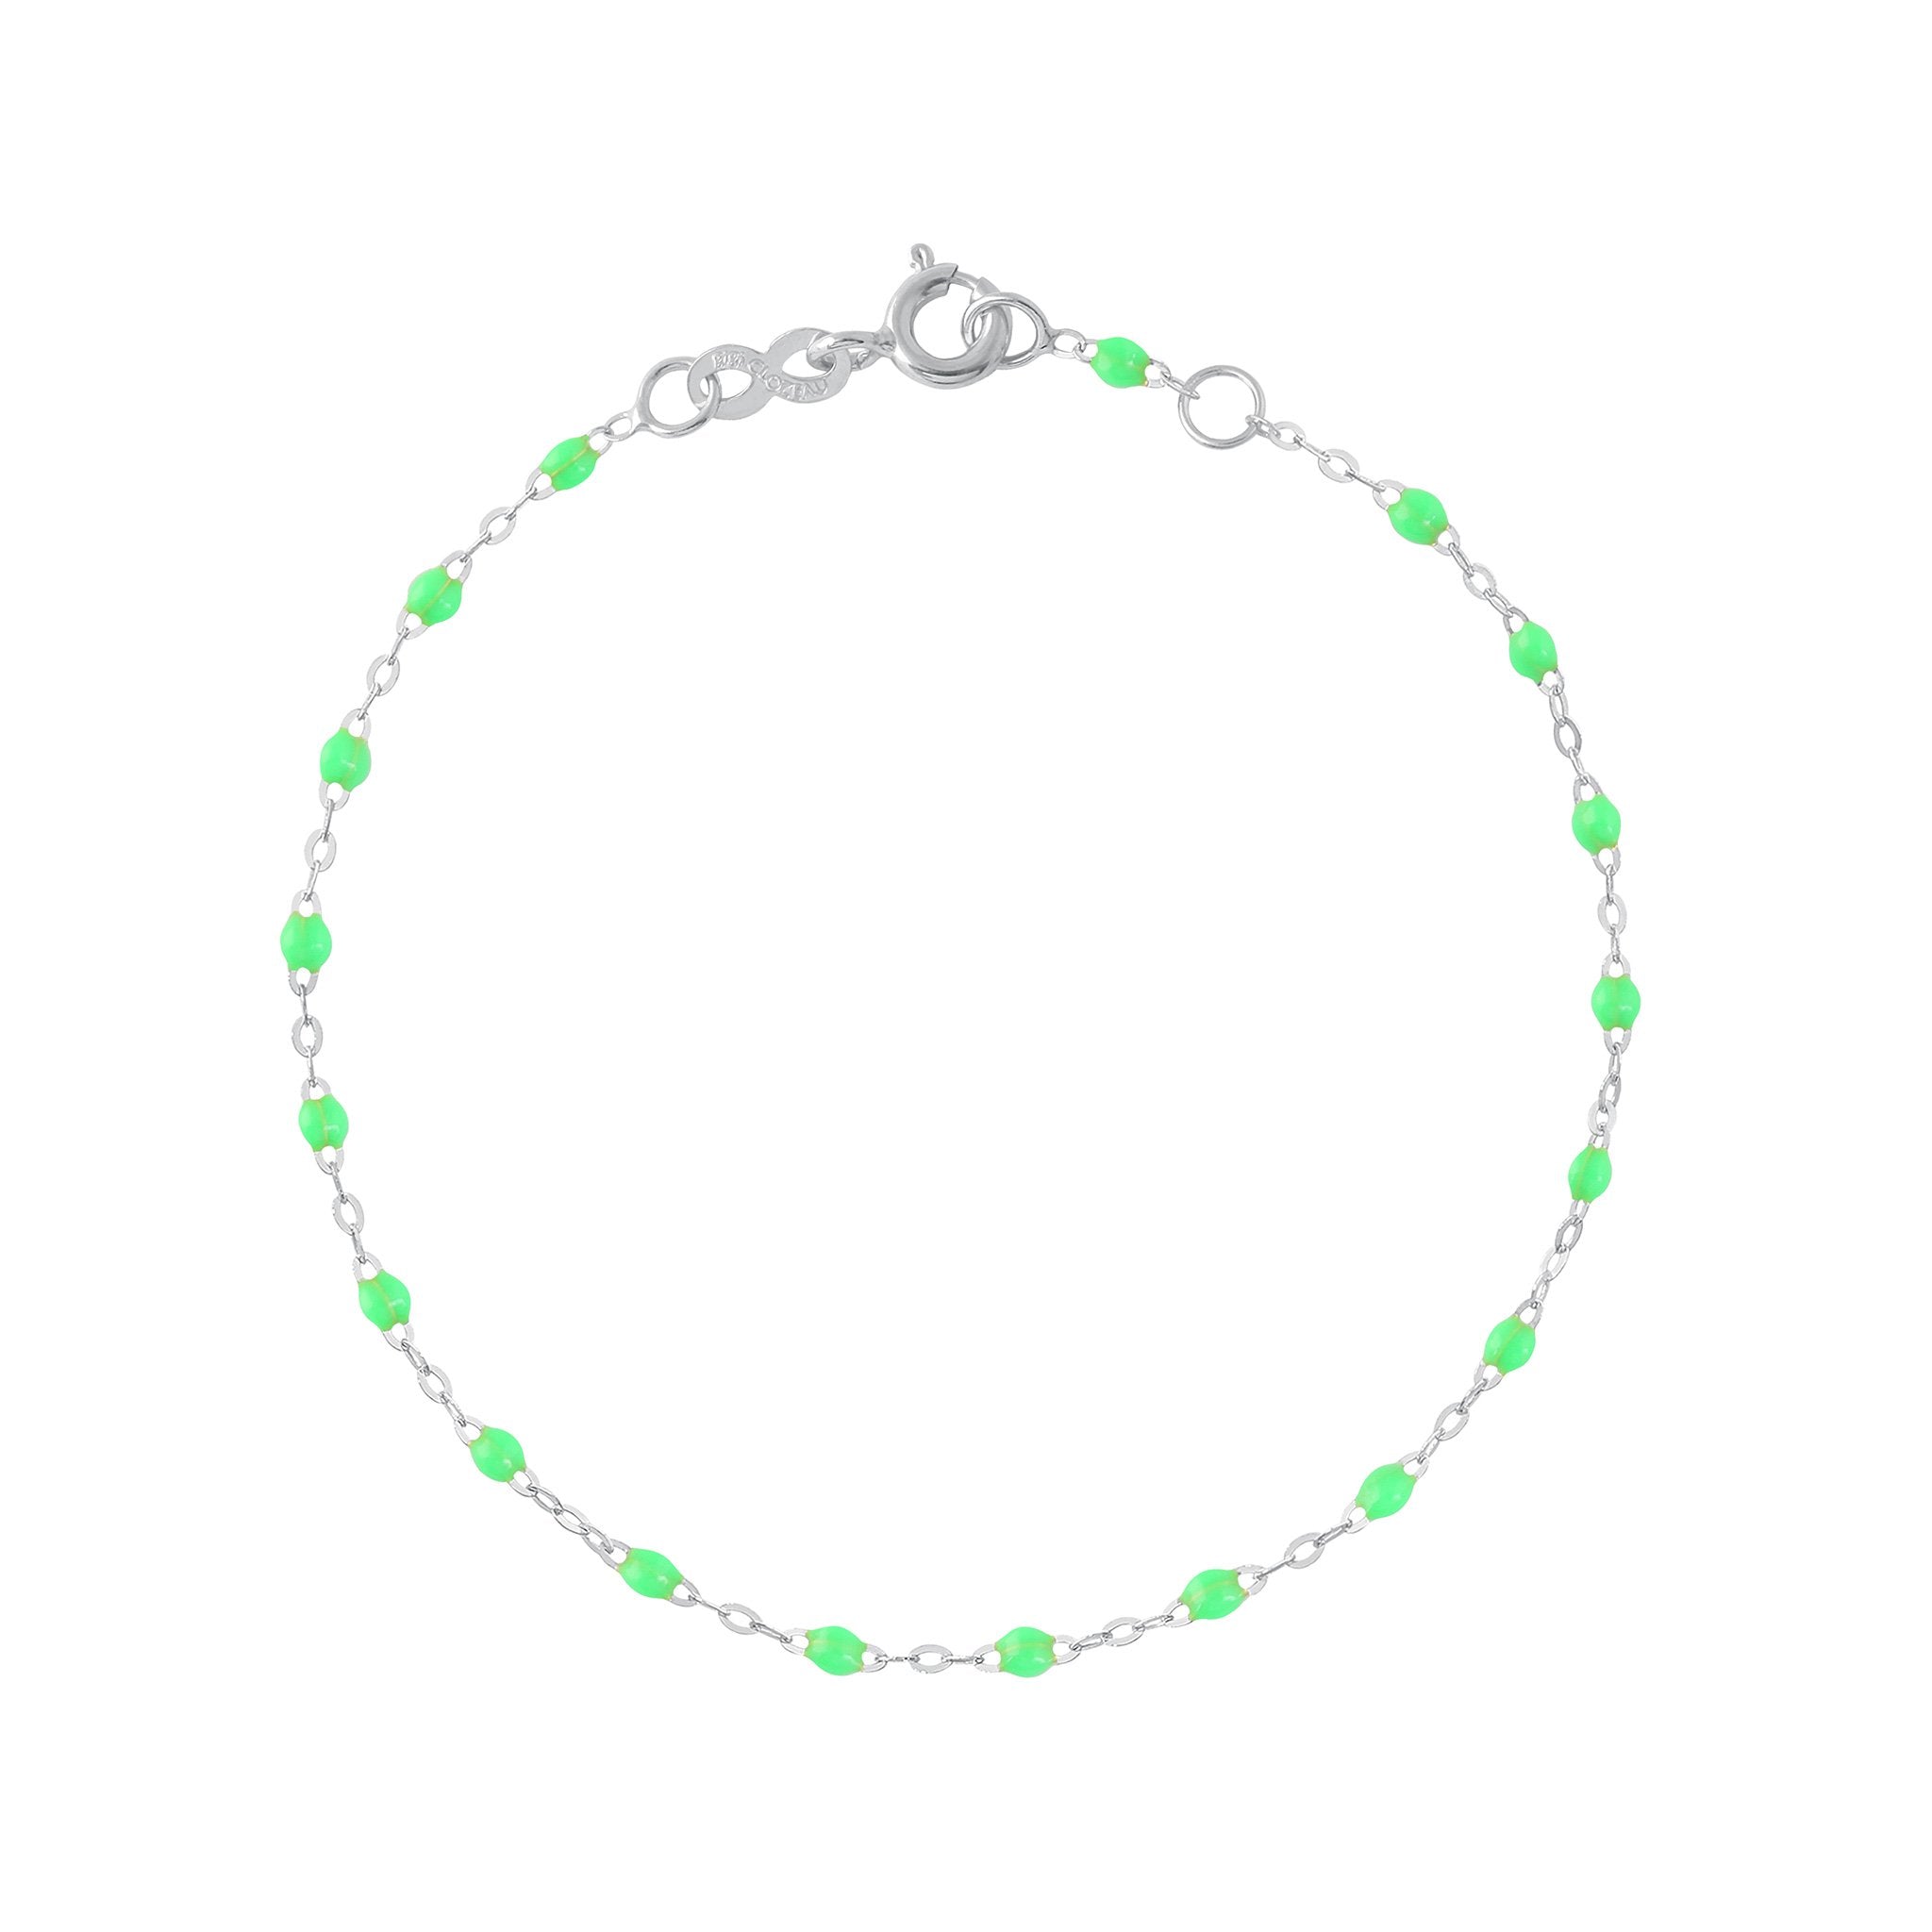 Bracelet vert fluo Classique Gigi, or blanc, 15 cm classique gigi Référence :  b3gi001g3615xx -1